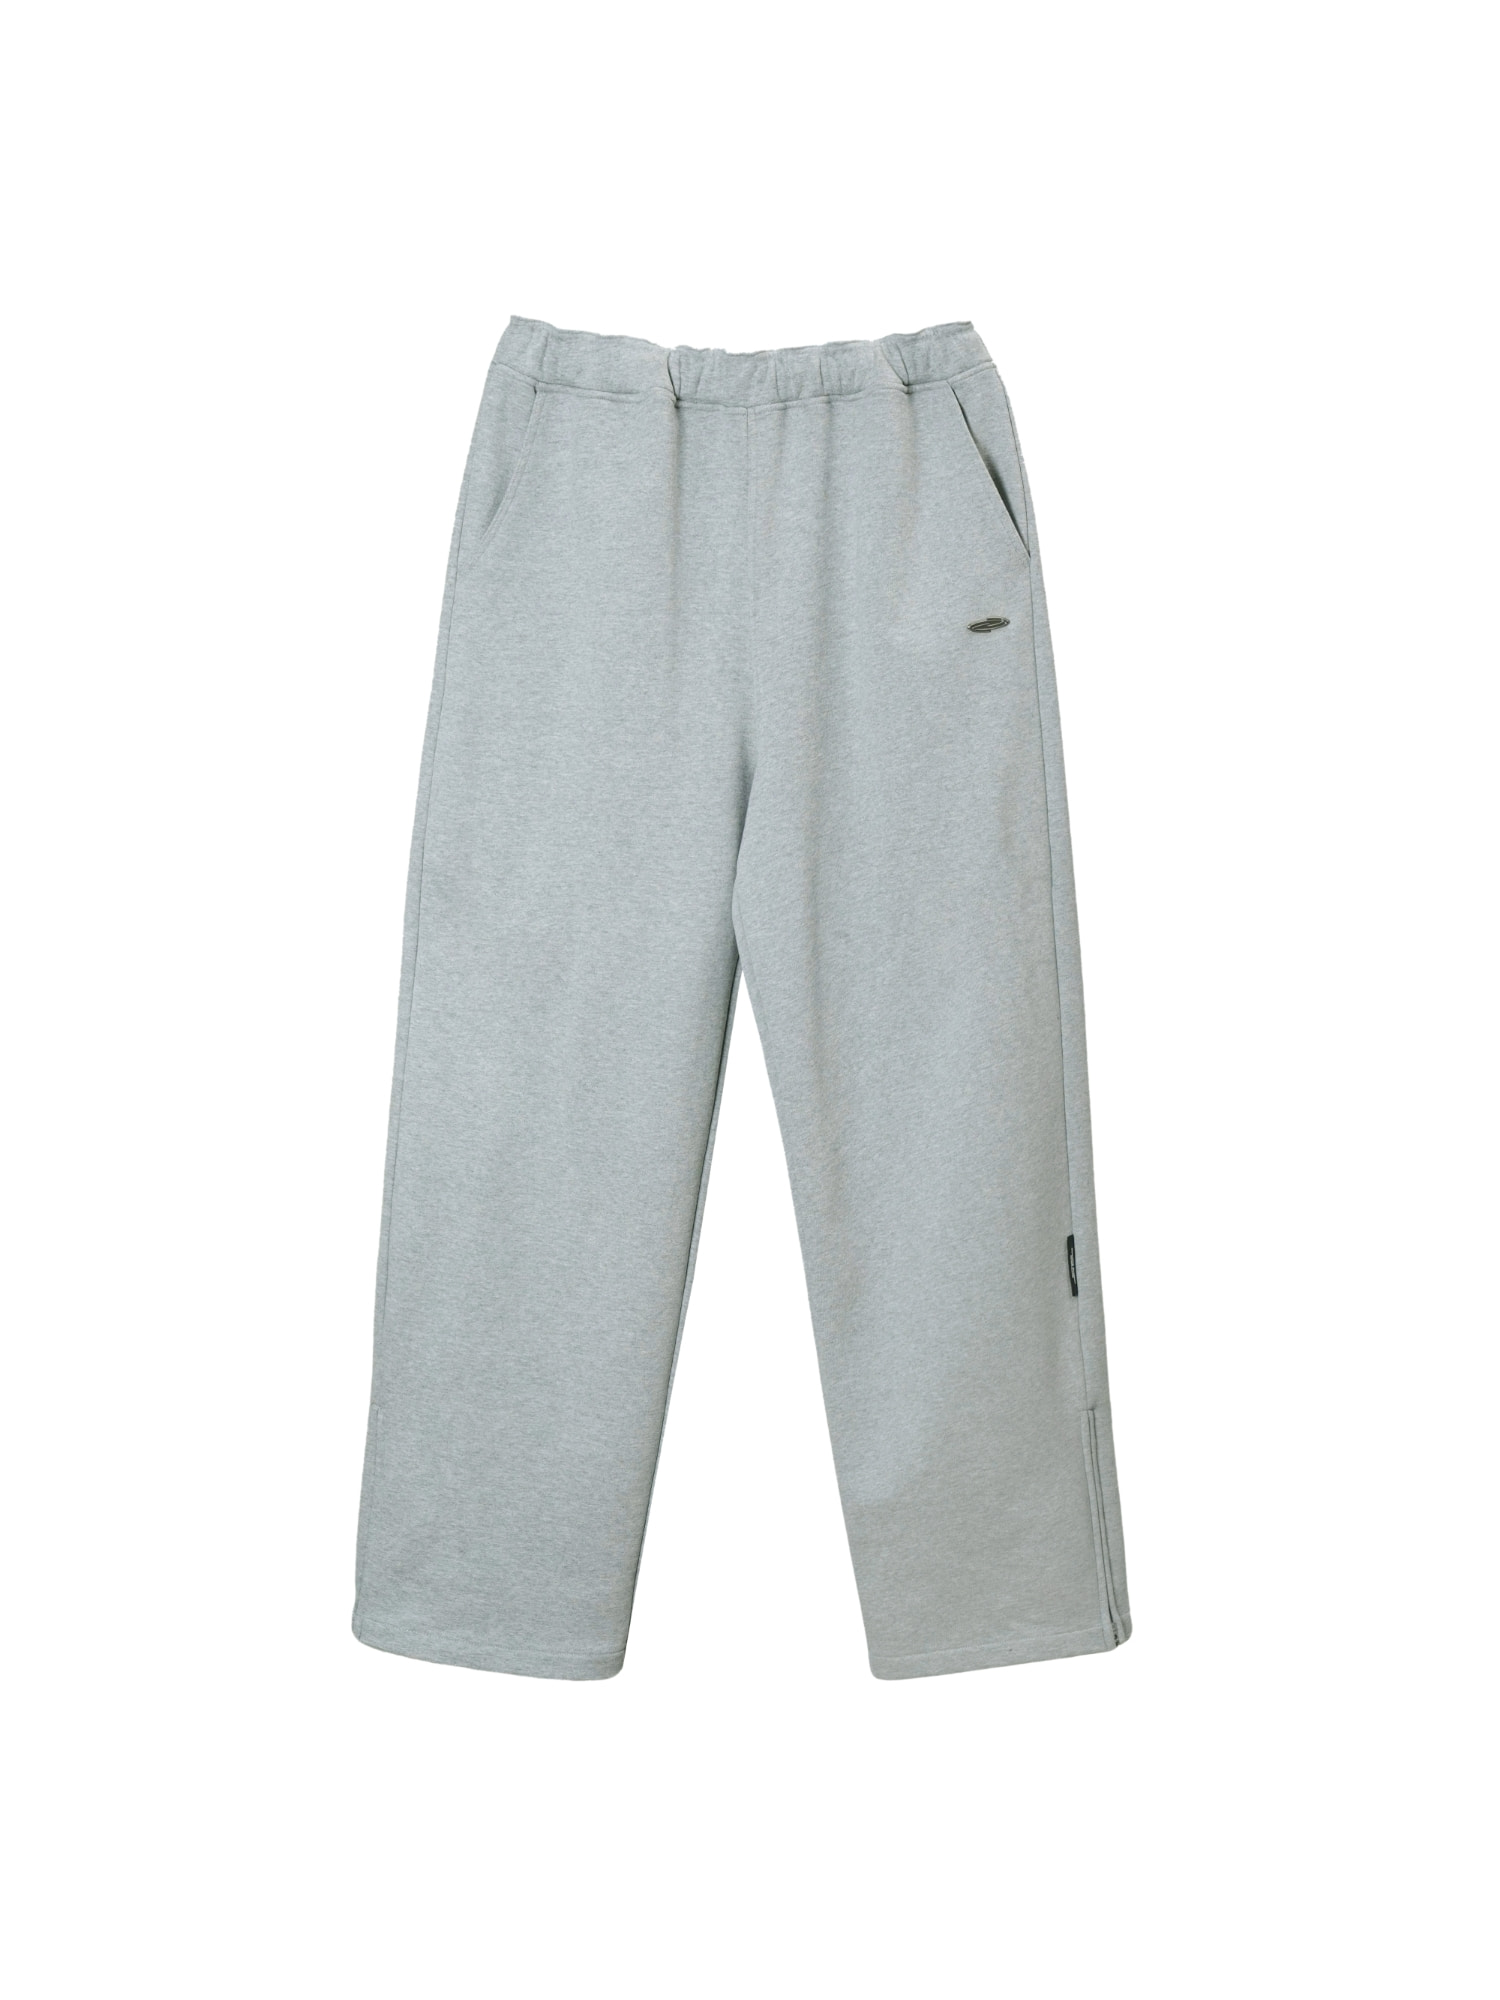 Sharp Sport Sweat Pant - Melange Grey